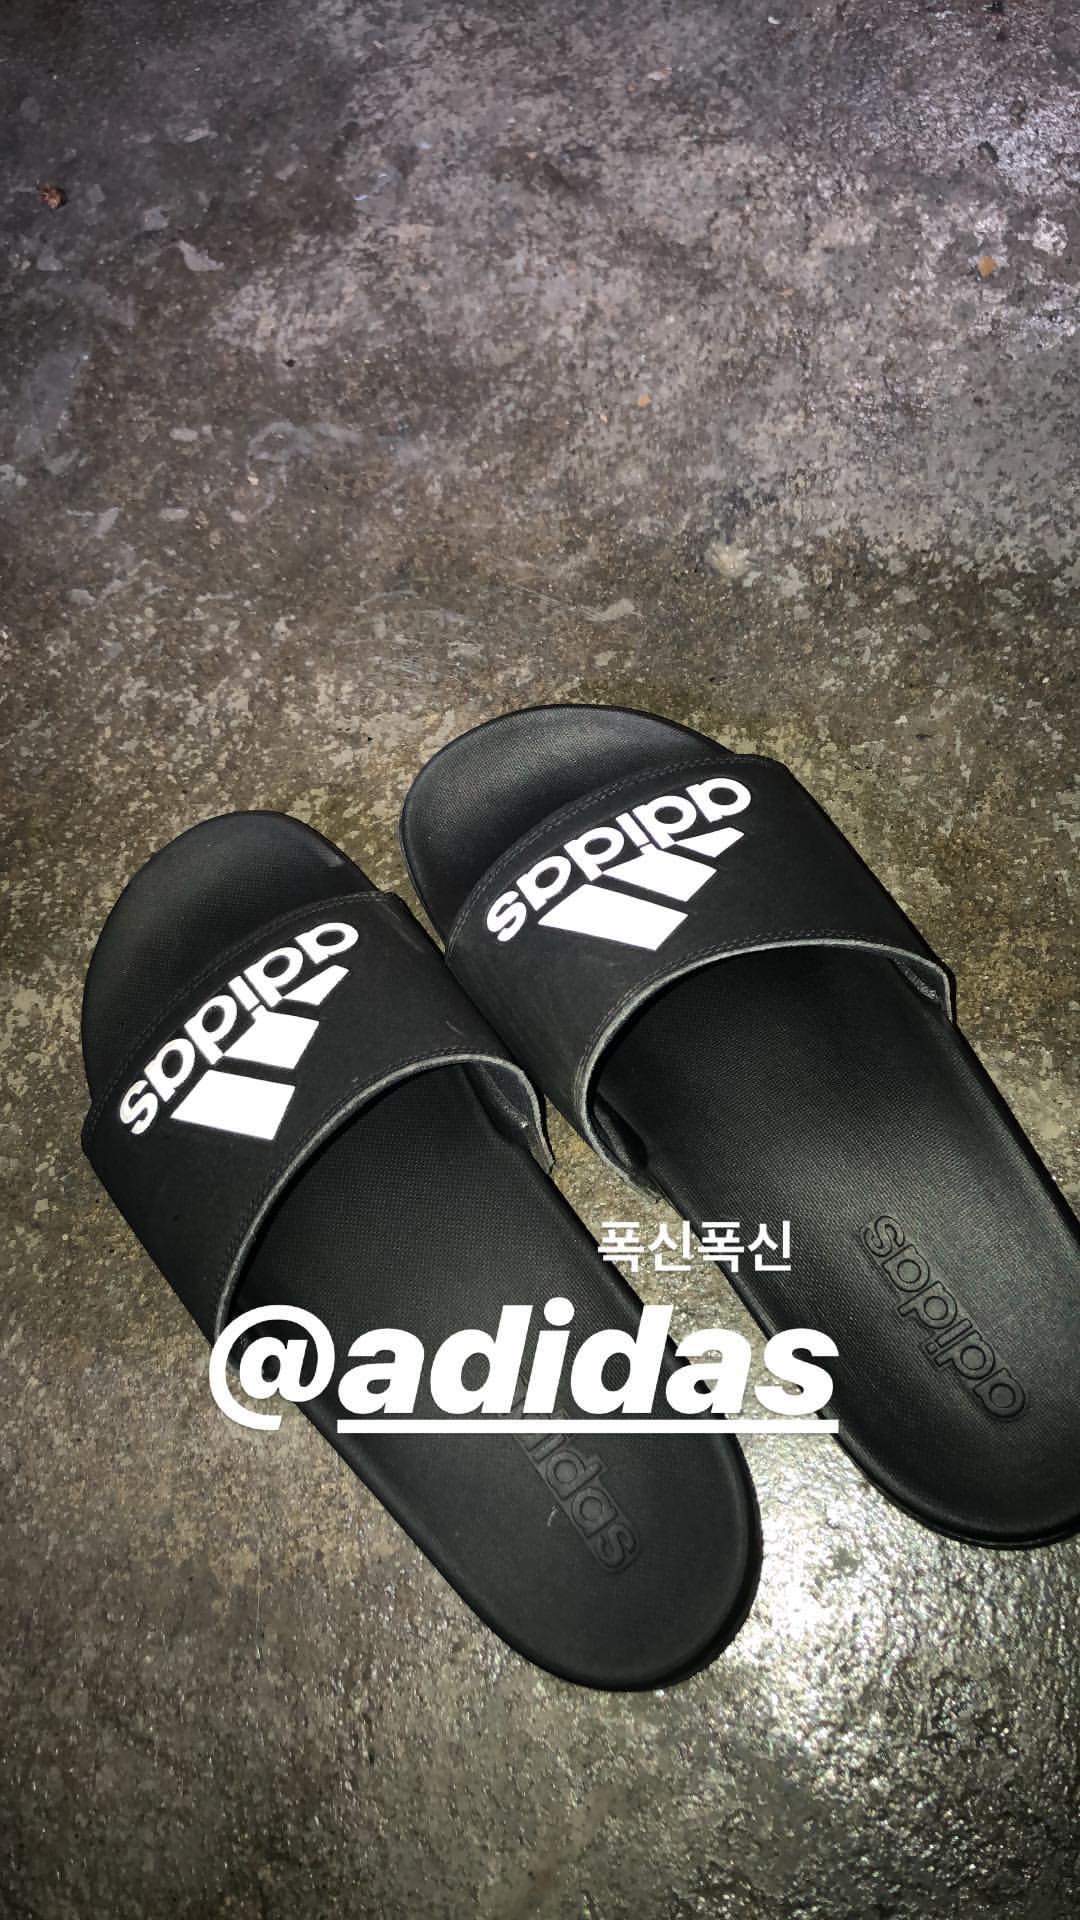 adidas slippers 2018